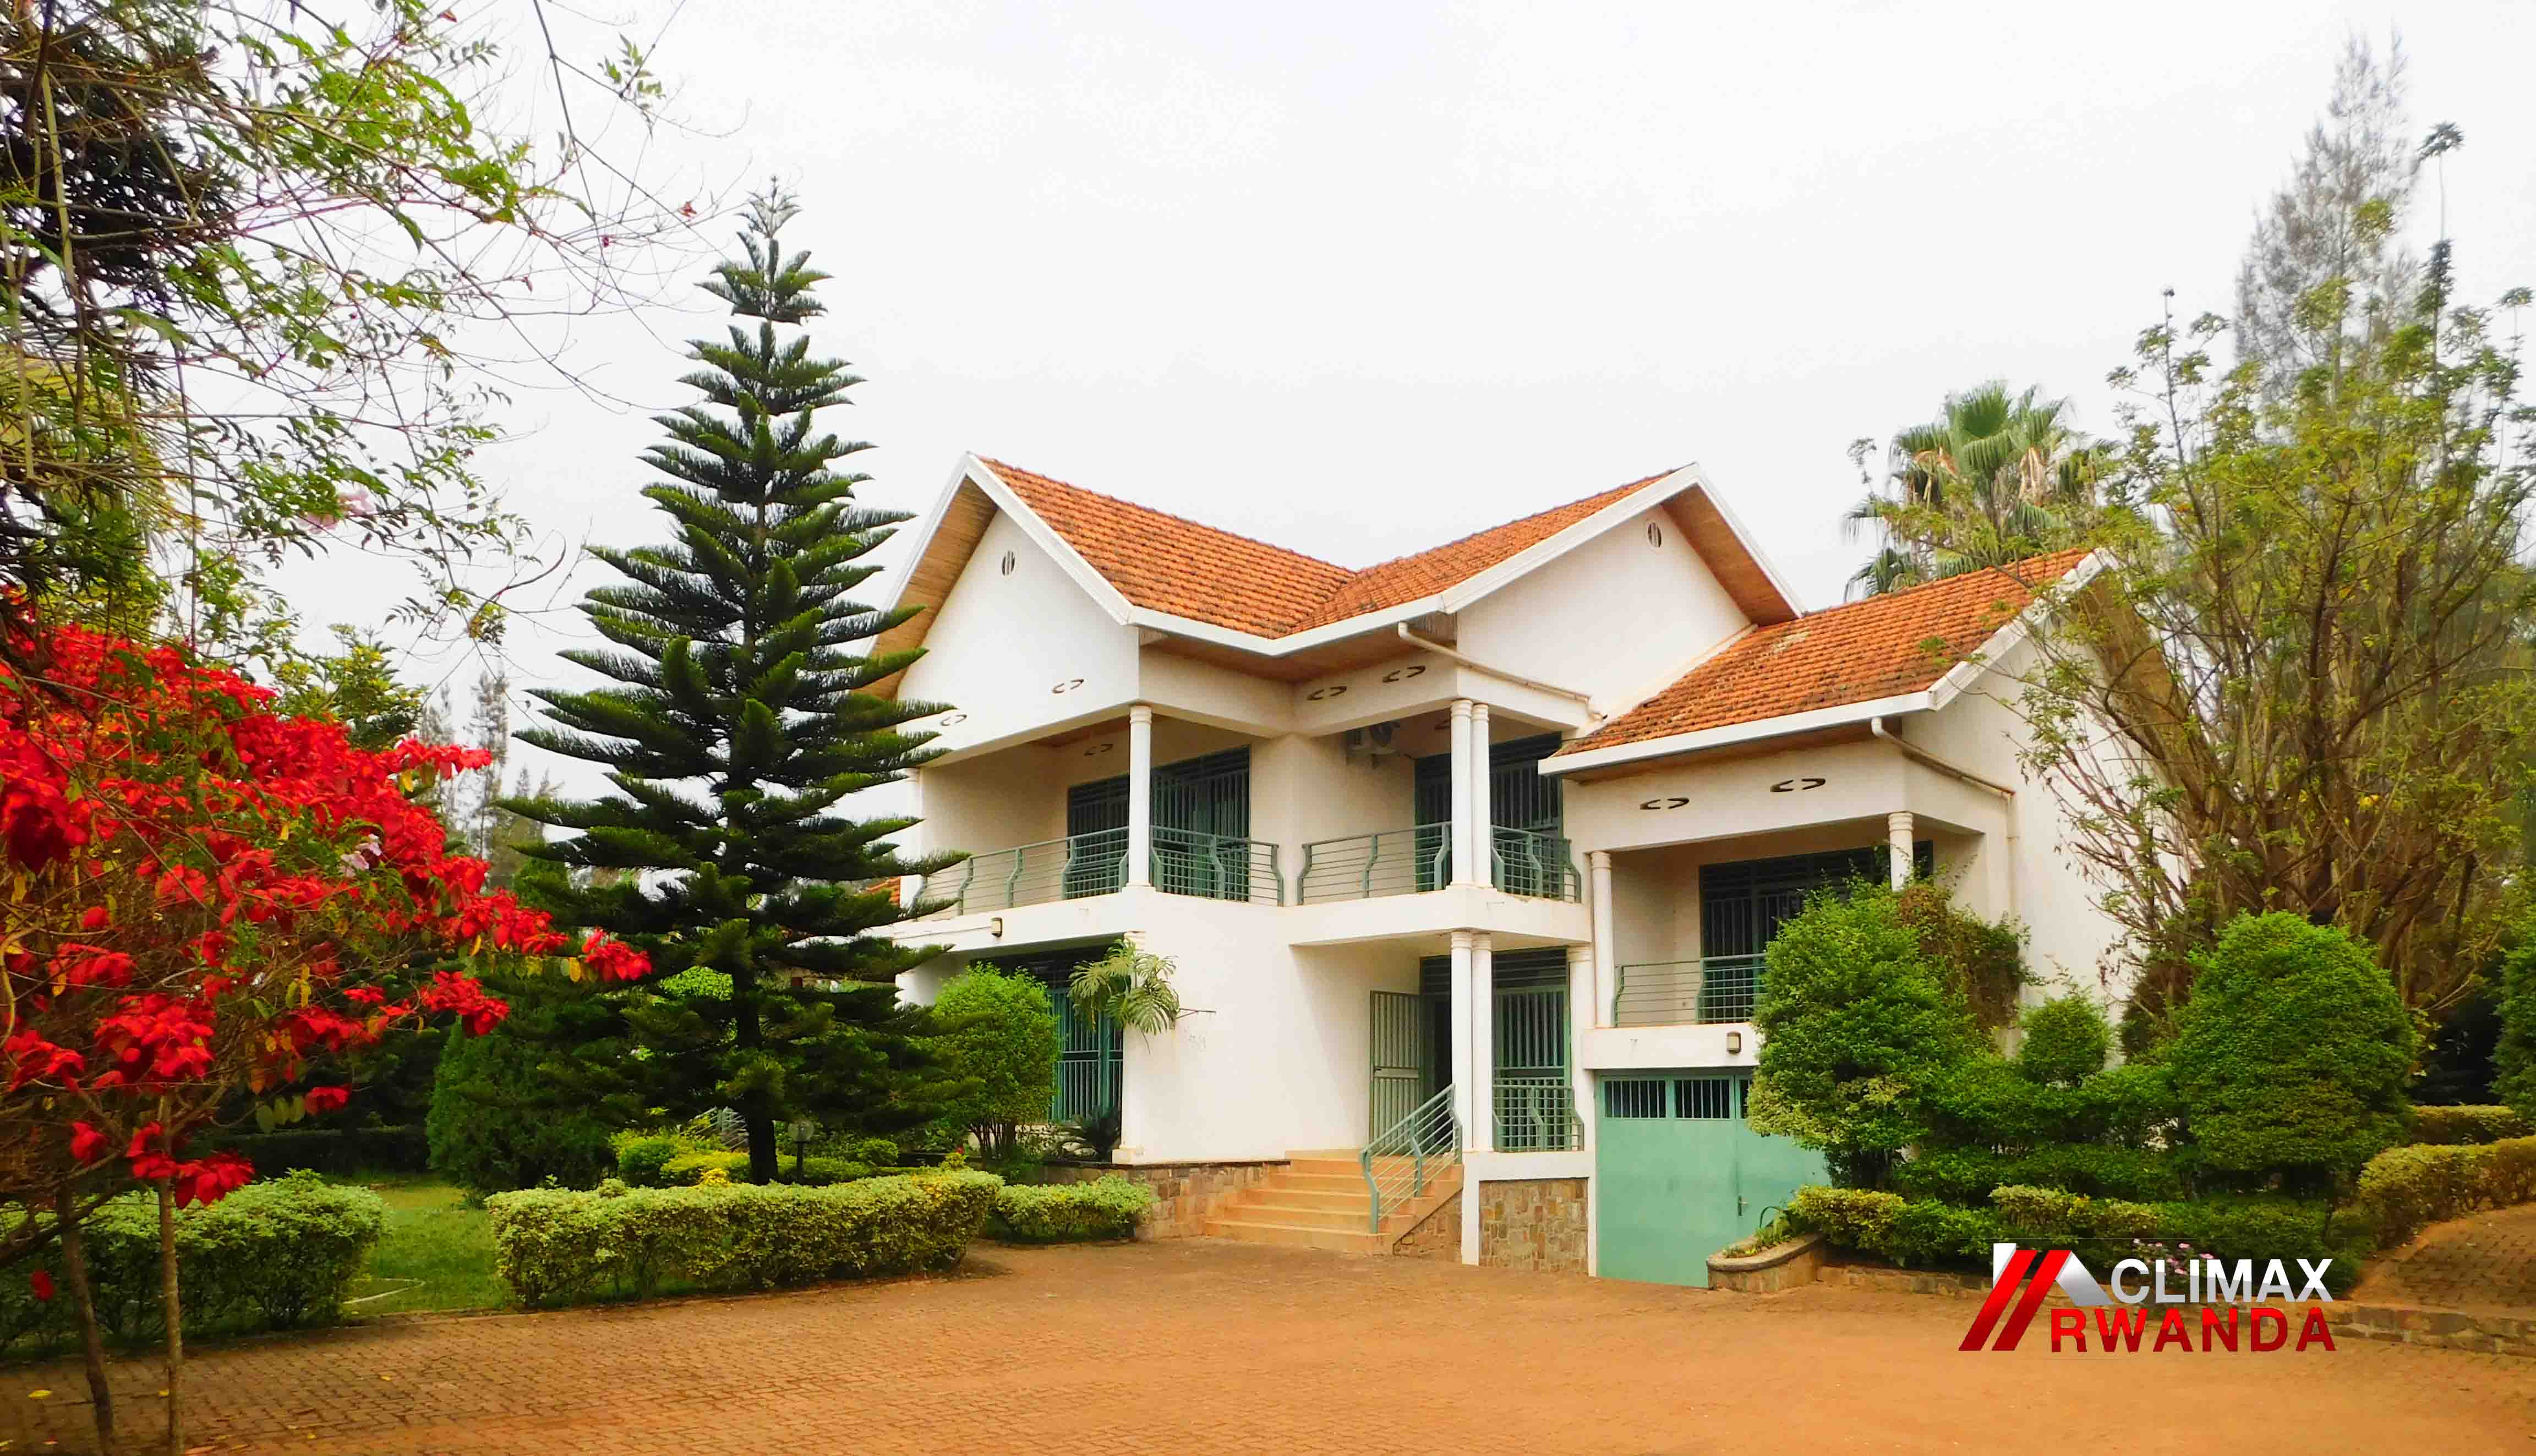 Beautiful House for rent in Kagugu. Kigali